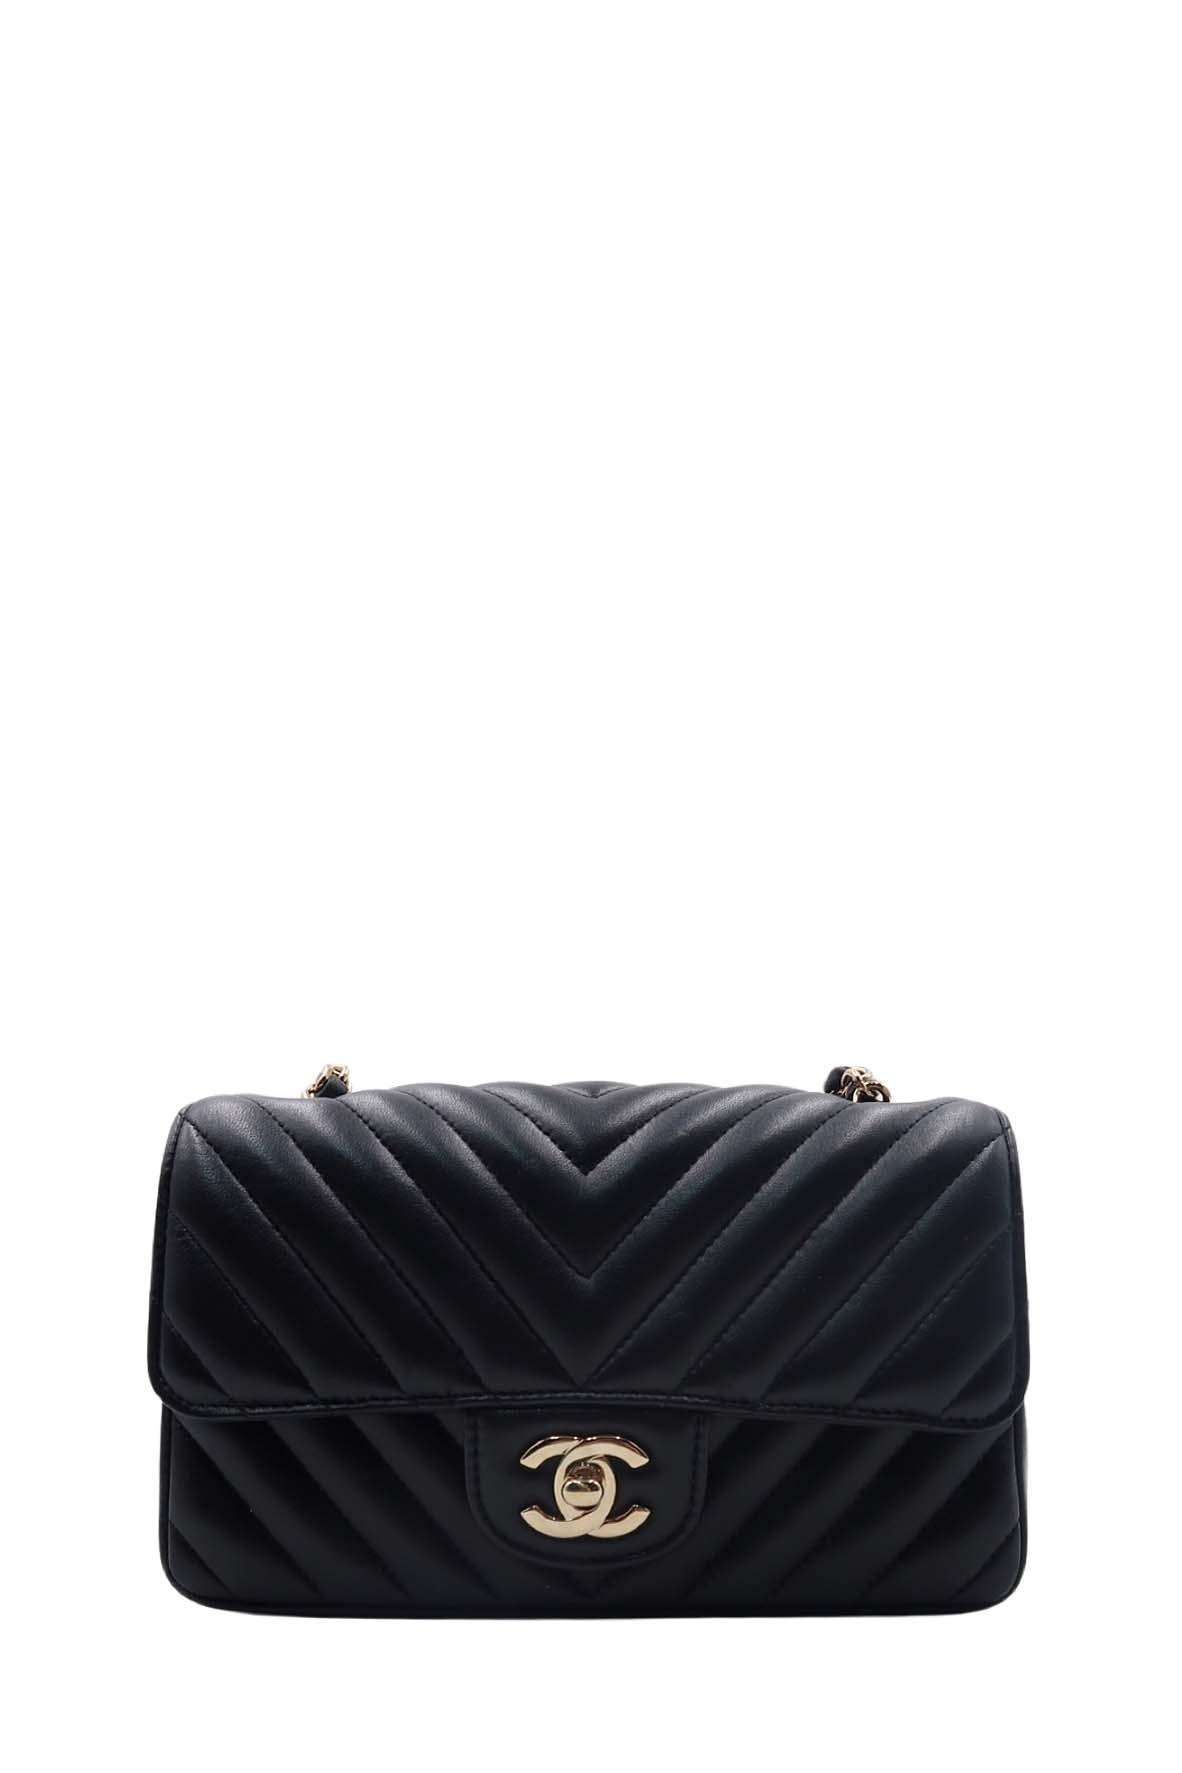 Chanel // Black Quilted CC Pearl Crush Mini Rectangular Flap Bag